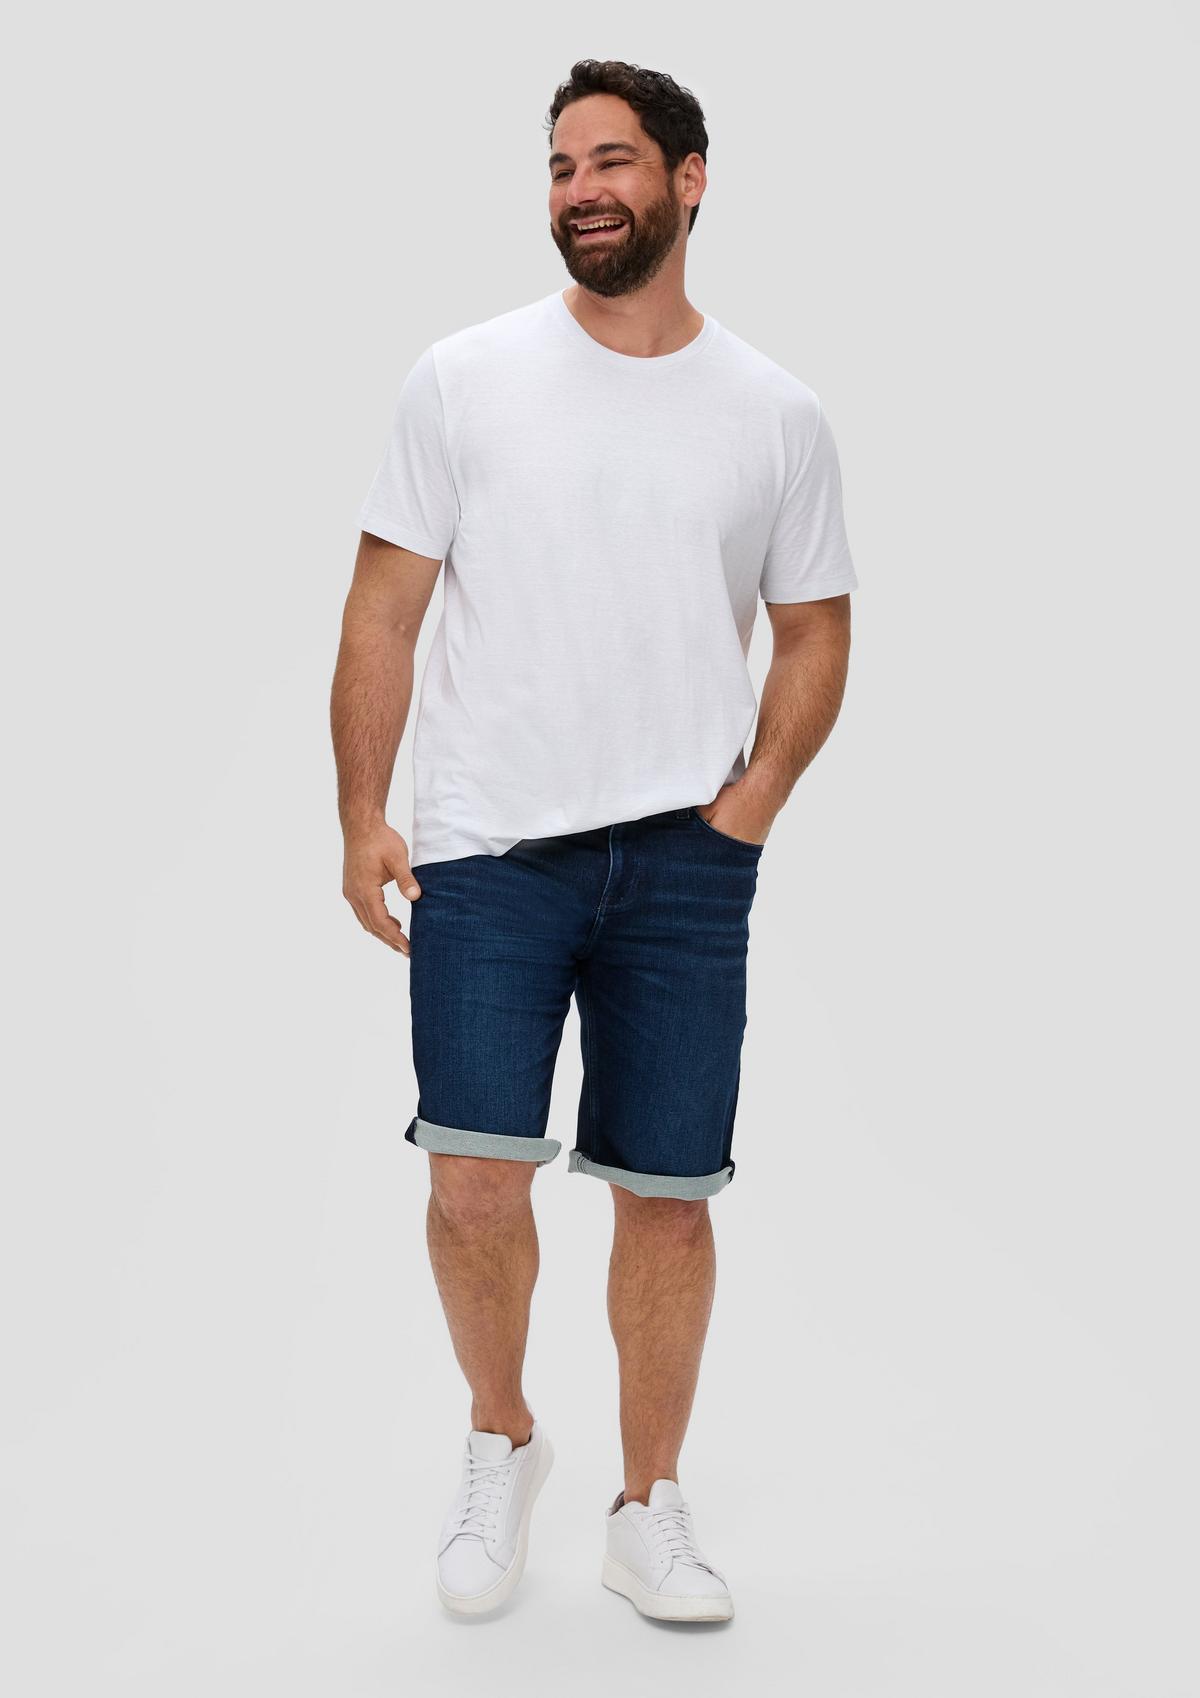 Bermuda Jeans Mauro / Regular Fit / High Rise / Straight Leg